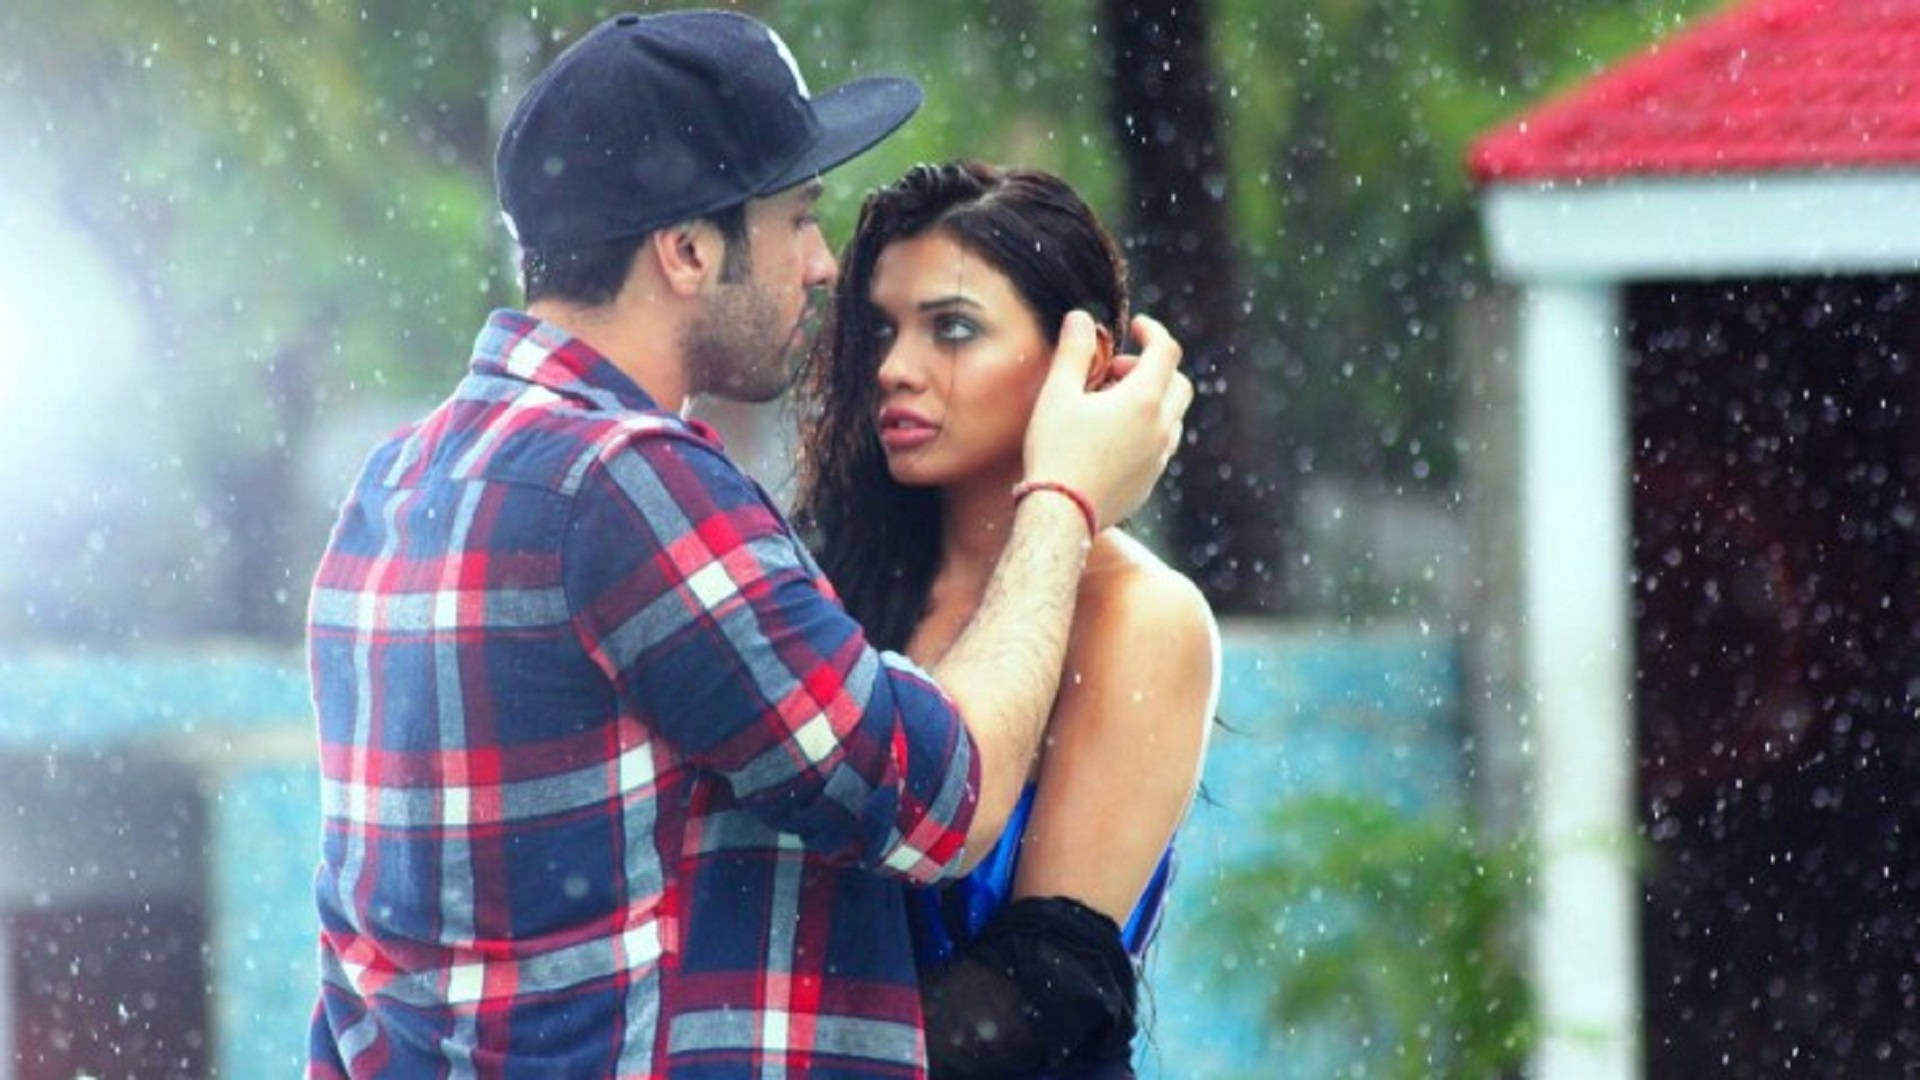 Romantic Love In The Rain Background